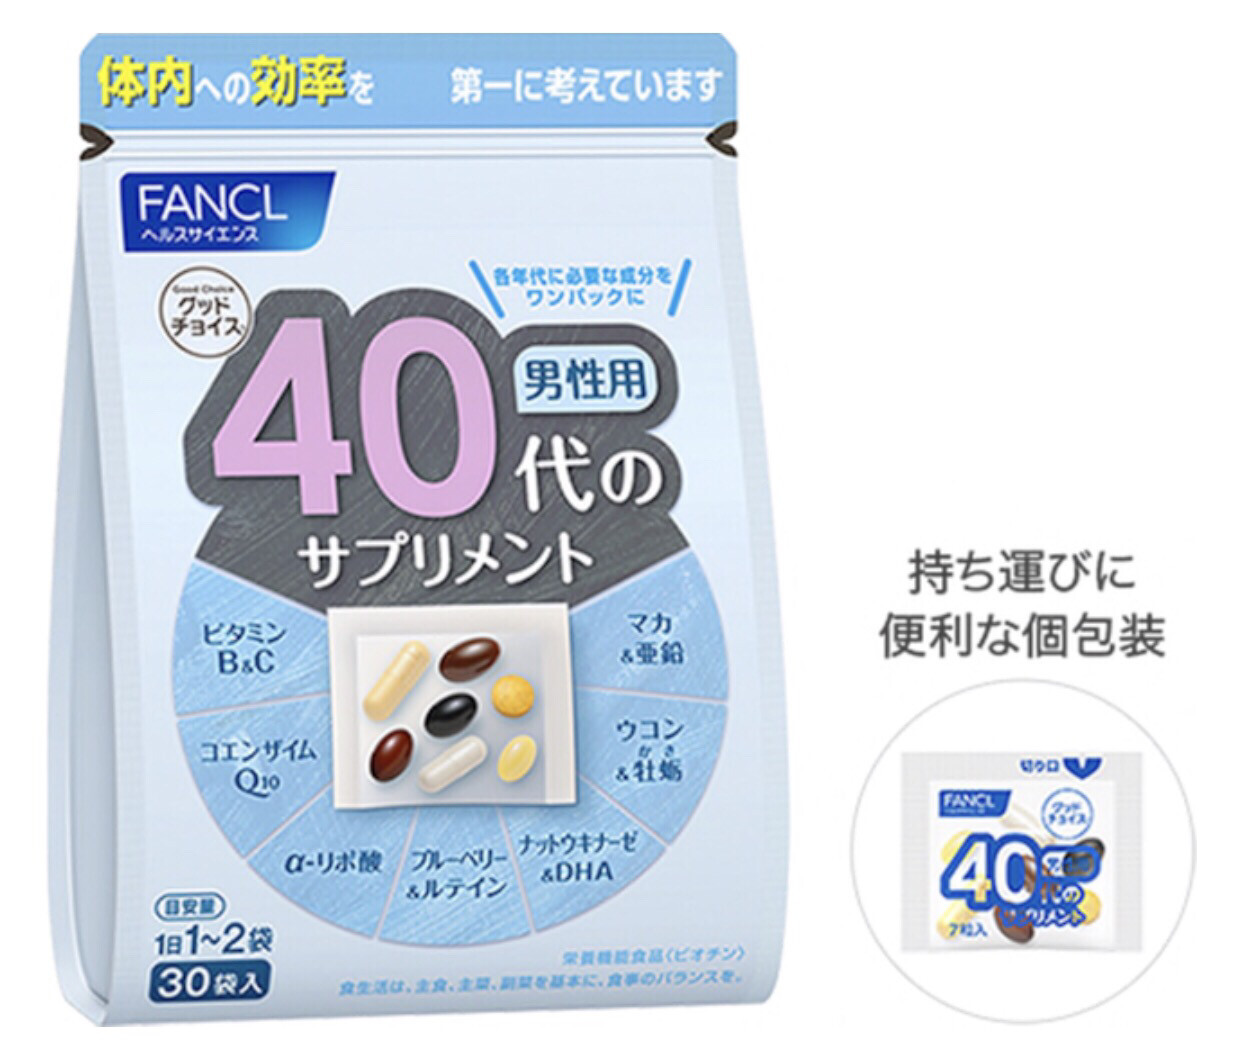 Fancl Good Choice Для мужчин от 40 лет